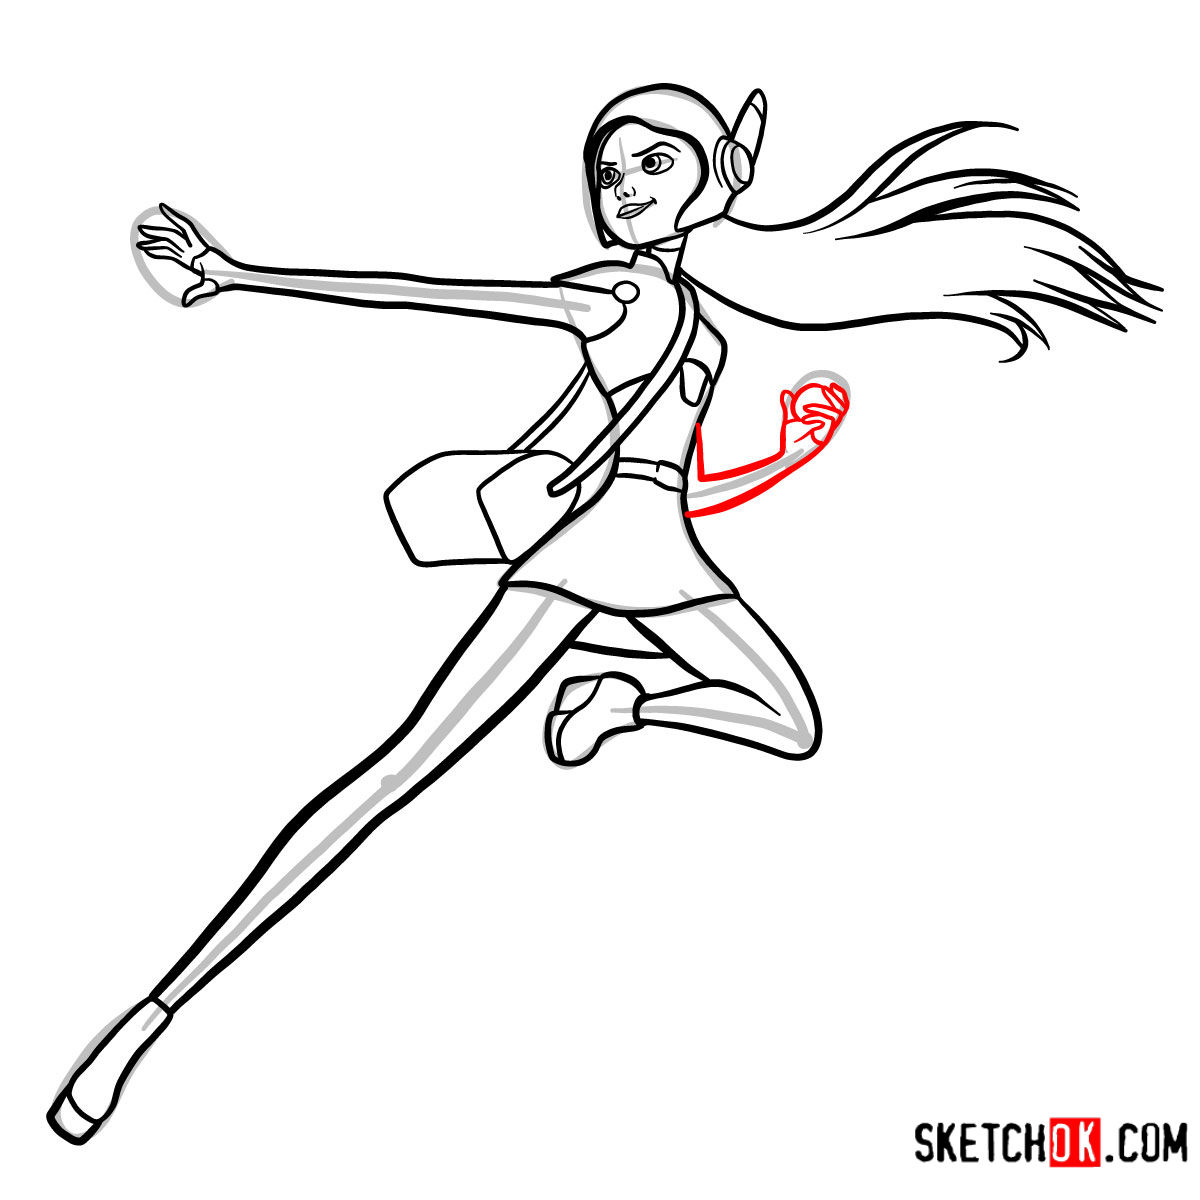 How to draw Honey Lemon in her superhero suit - step 12